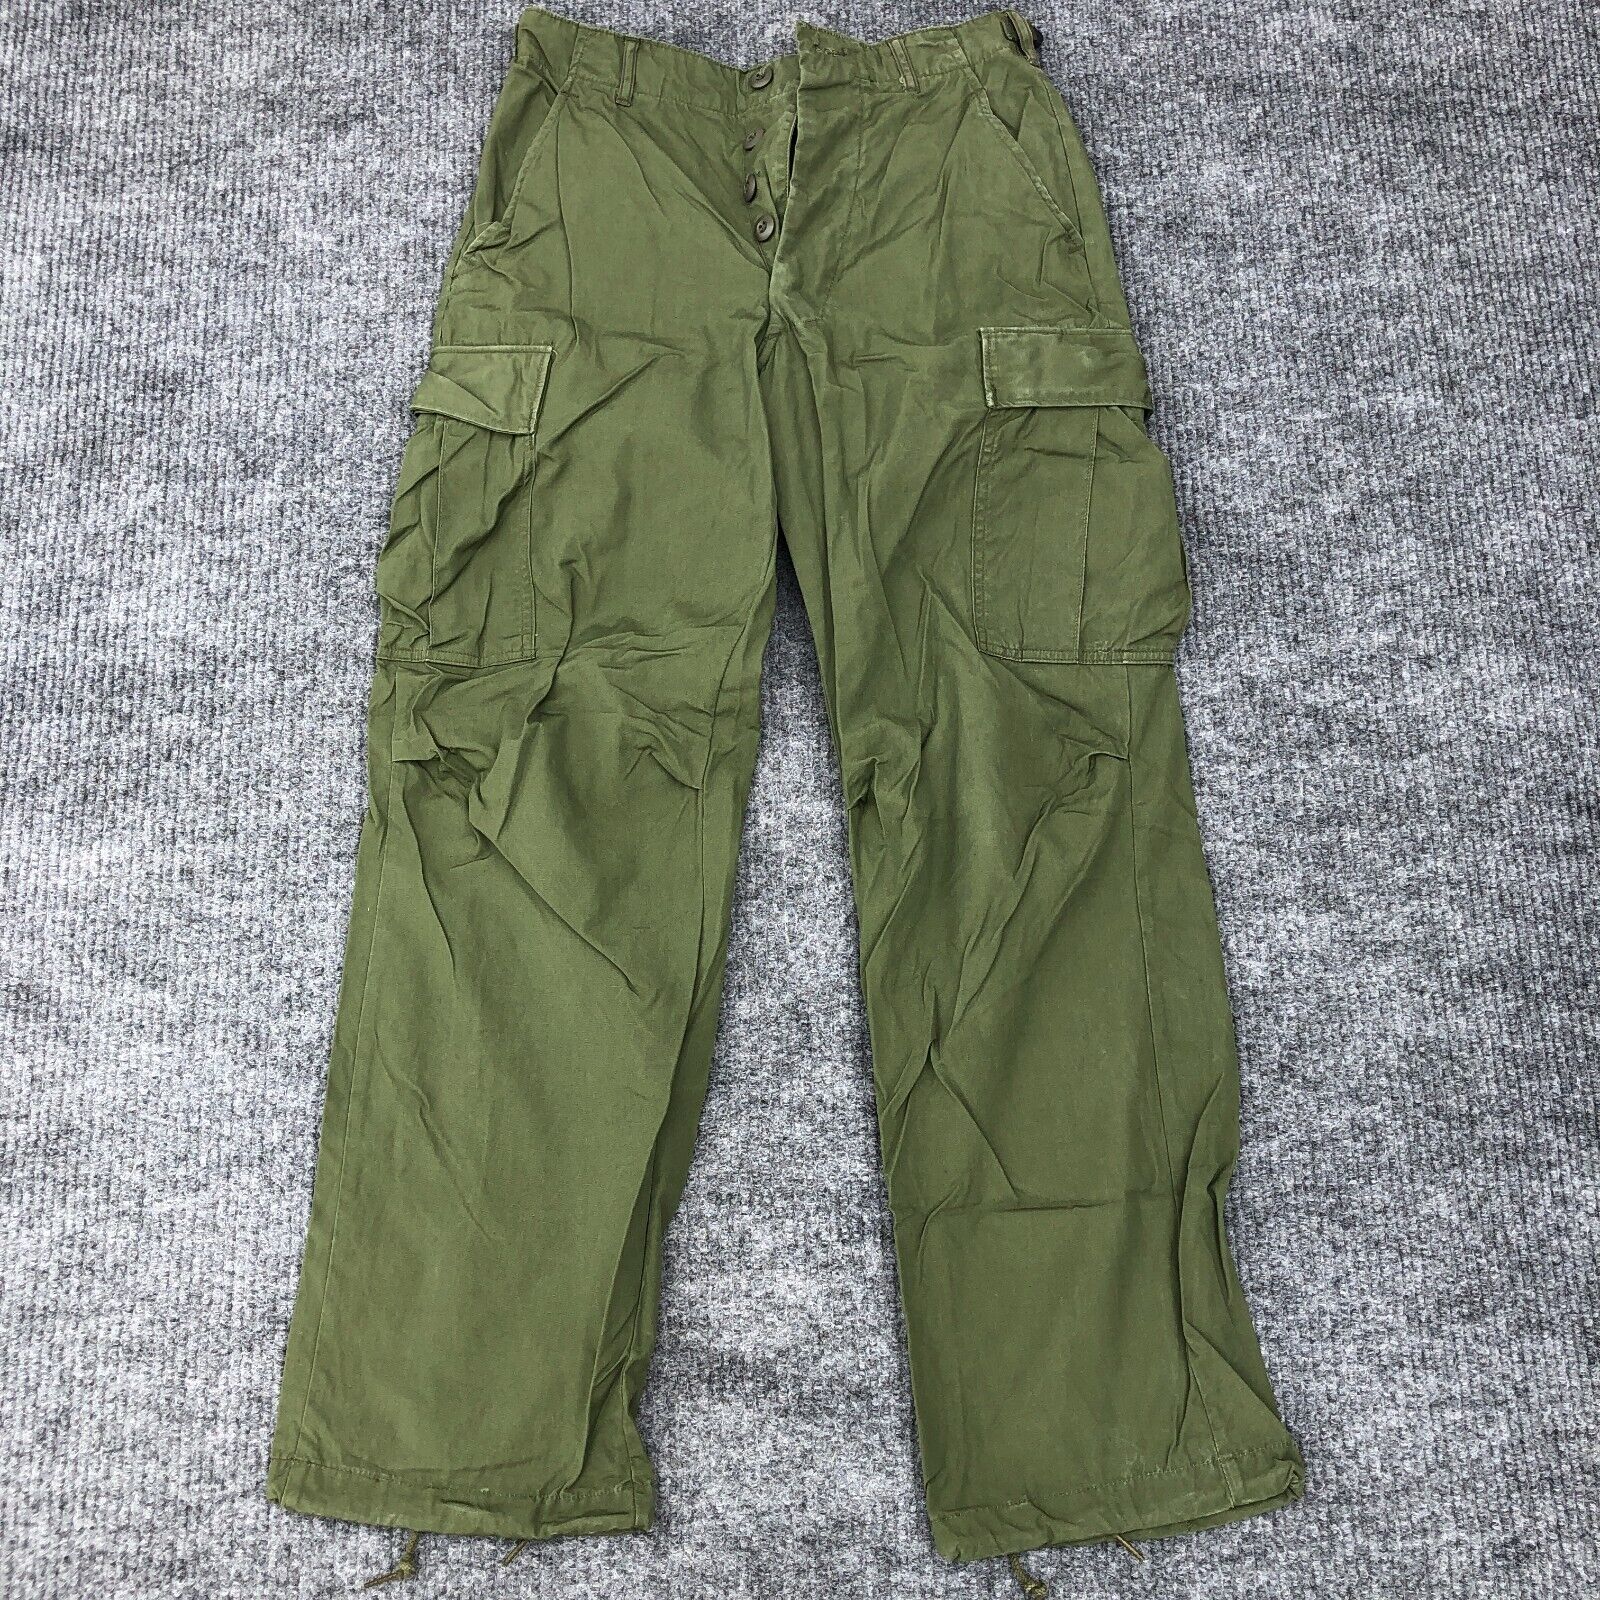 Vintage Army Men's Tropical Combat Pants Cargo OG-107 Green Small Reg 1967